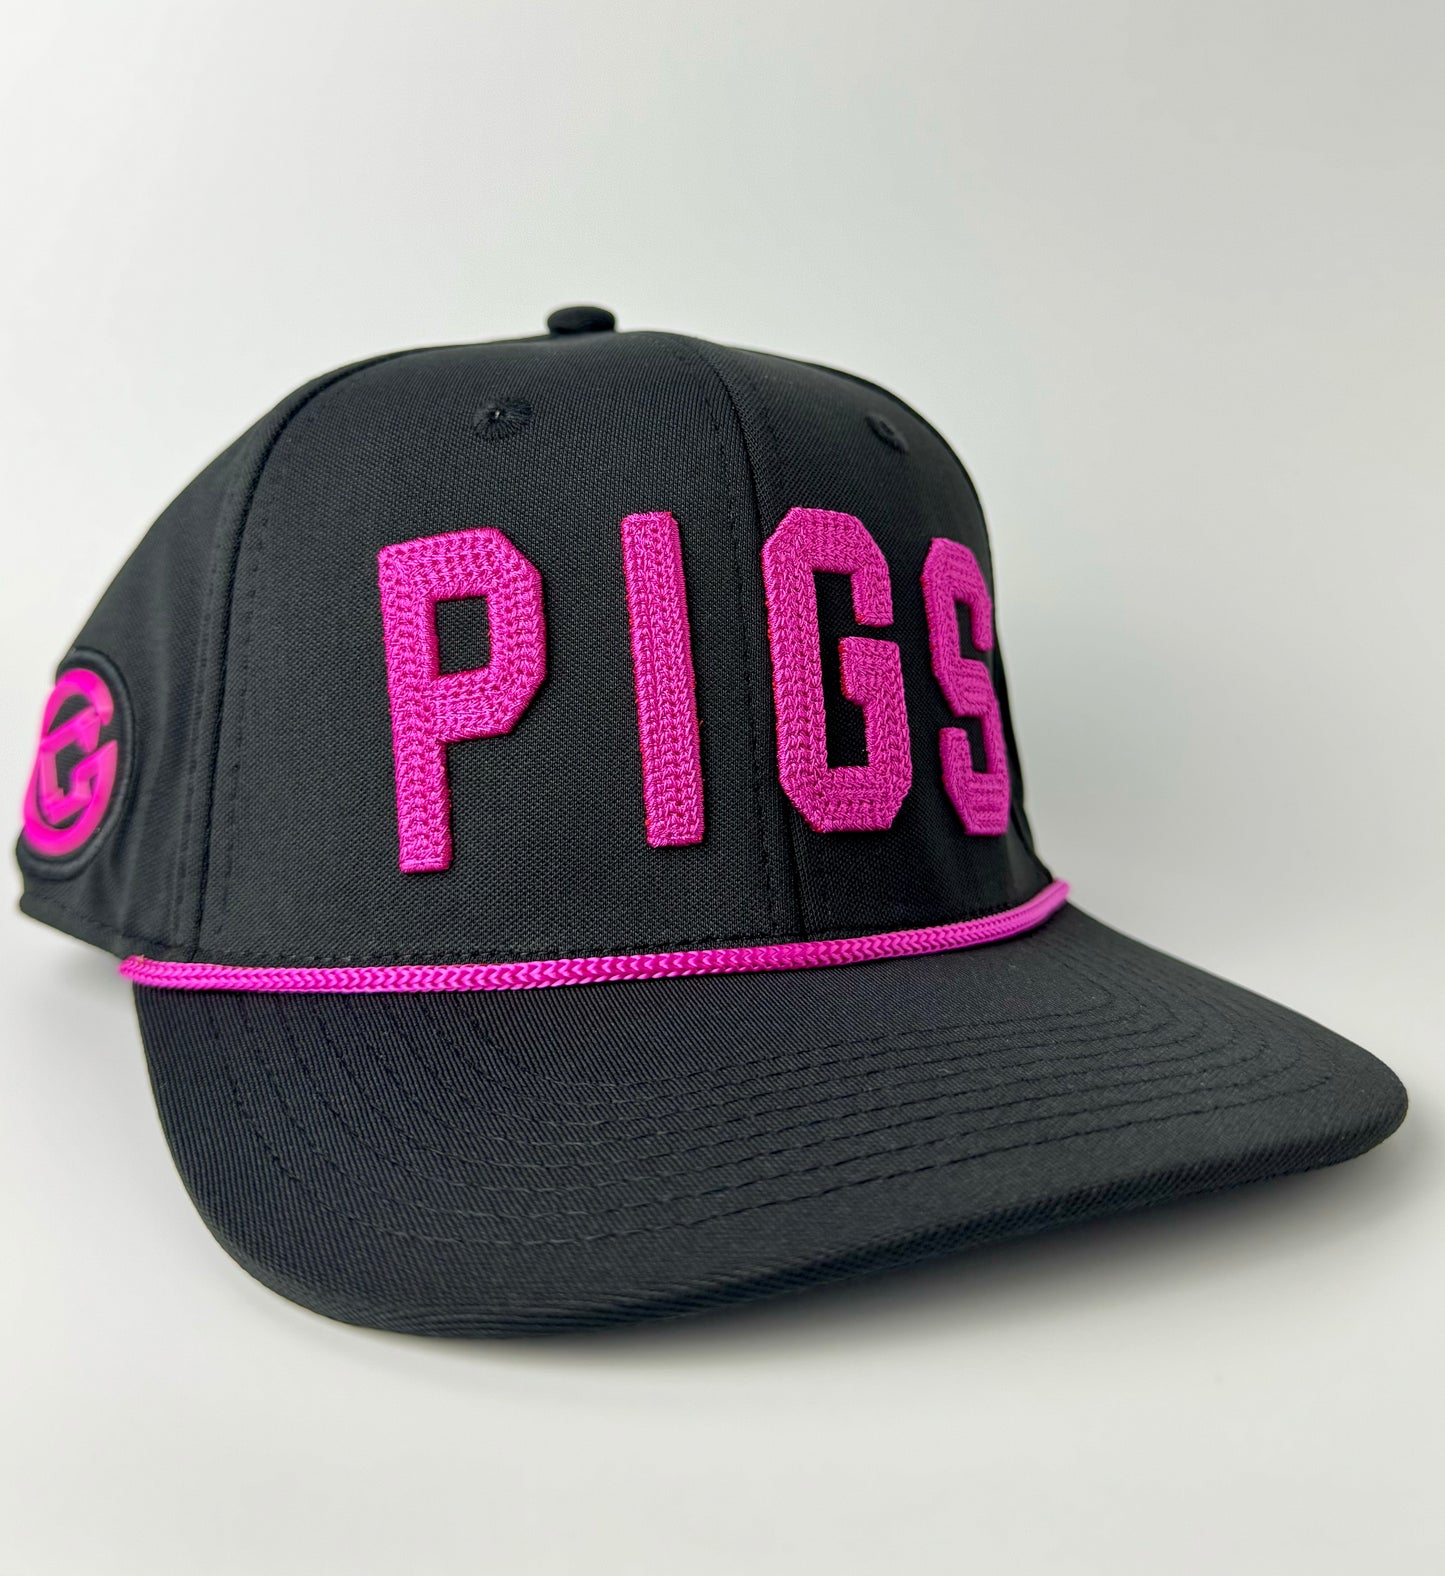 "OG" PIGS - Black with Bubblegum - Snapback - Flat Bill